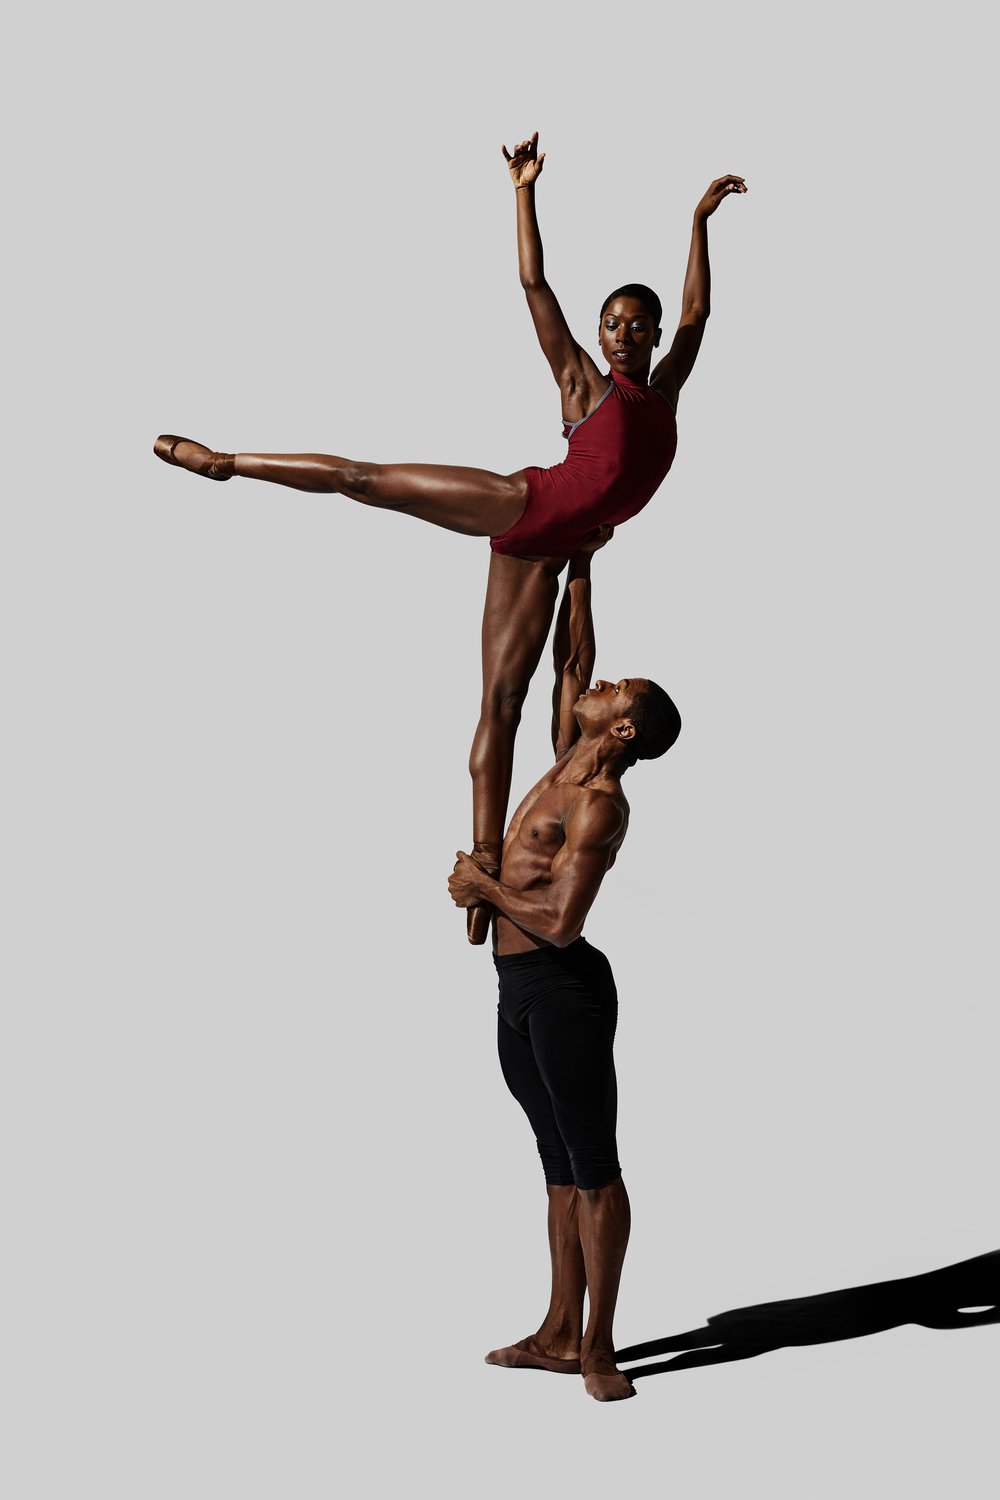 Image of José Alves and Cira Robinson, both former Senior Artists with Ballet Black.